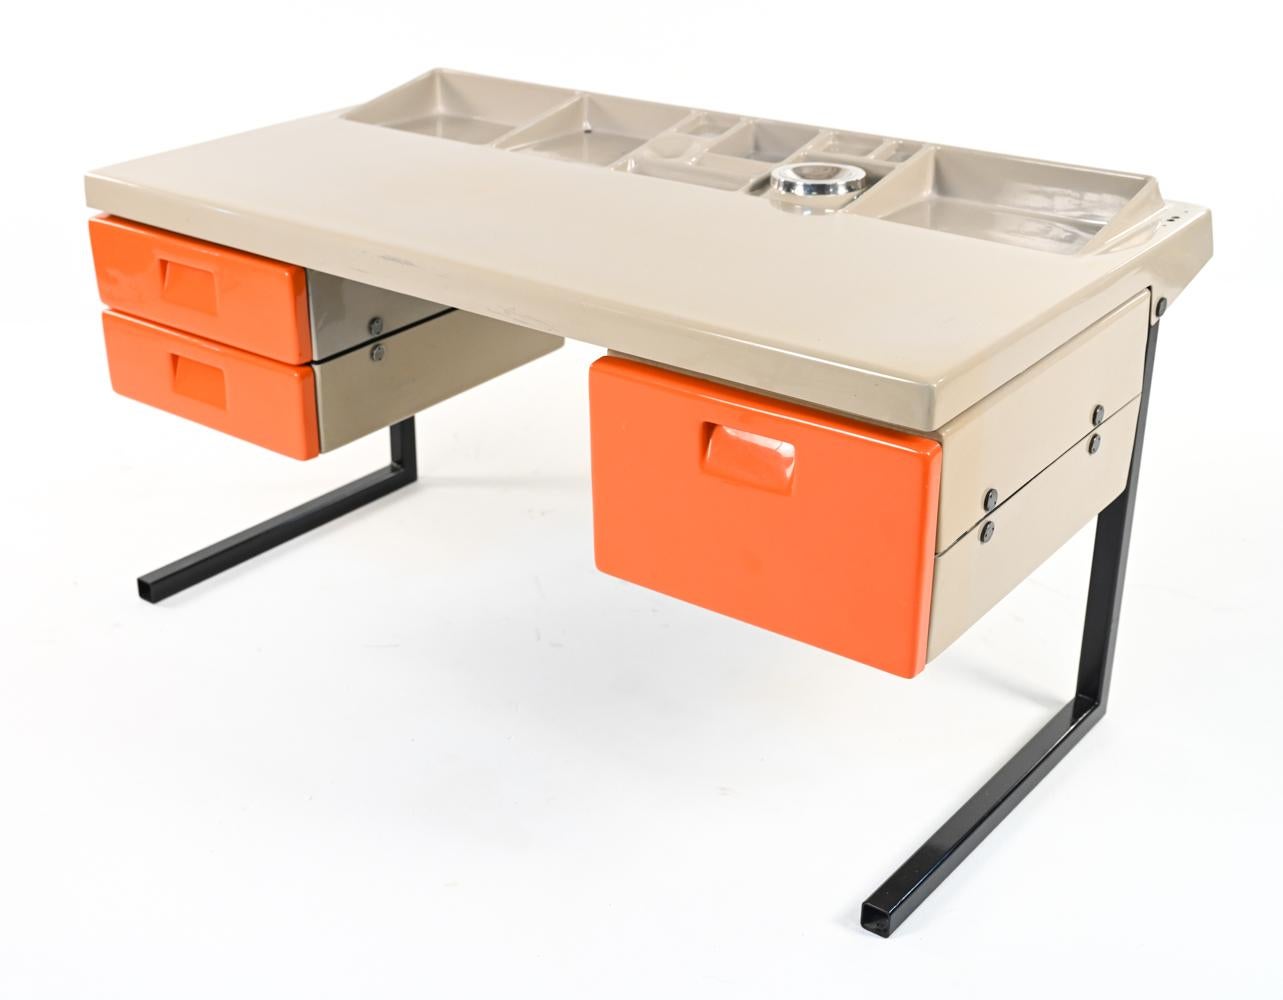 Rare 1970's Jorge Zalszupin L'atelier Space-Age Plastic Desk For Sale 3